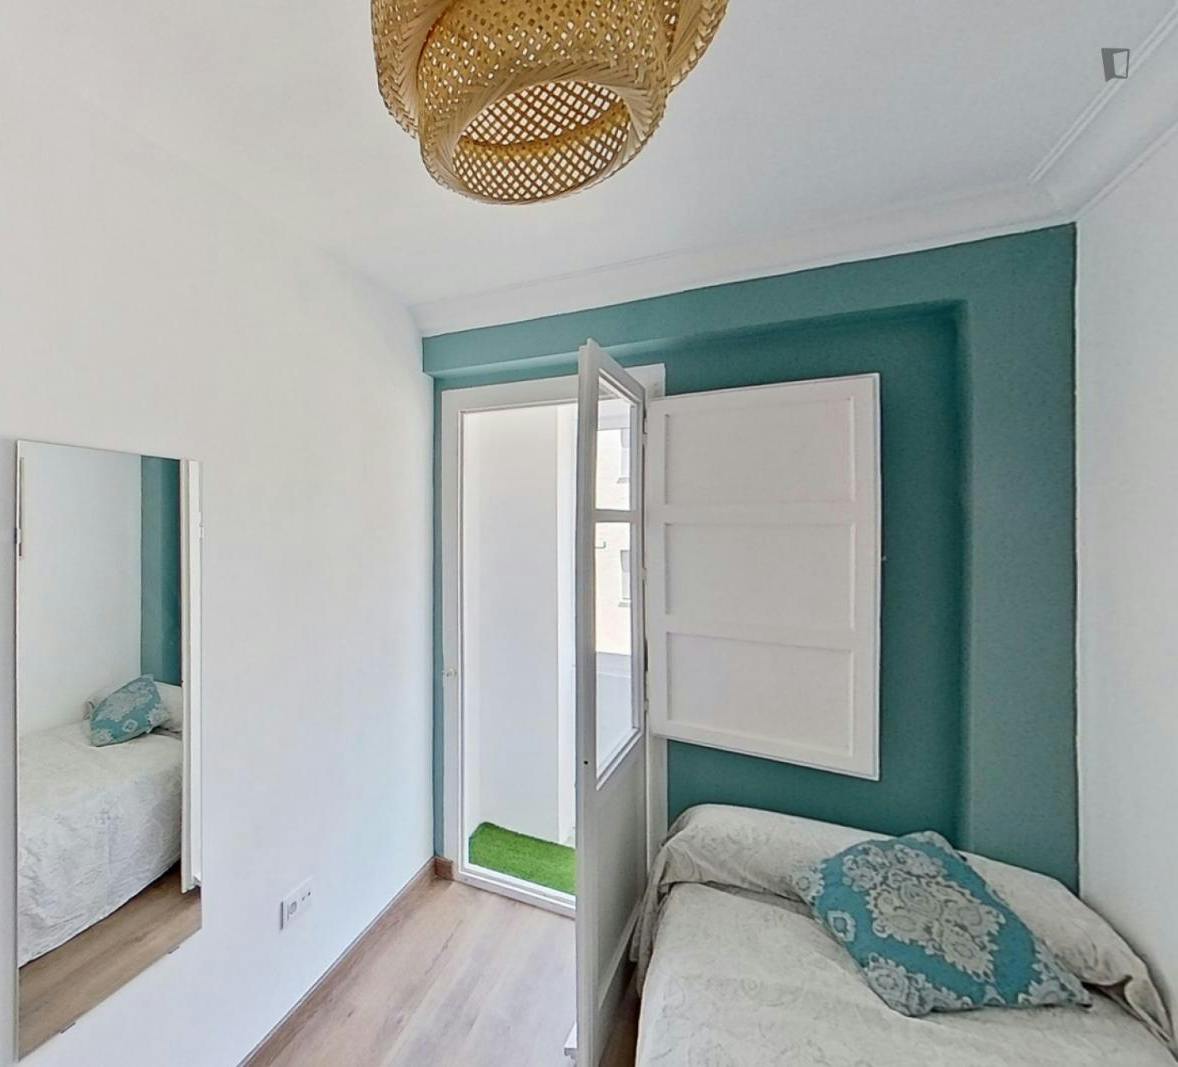 Attractive single bedroom with balcony